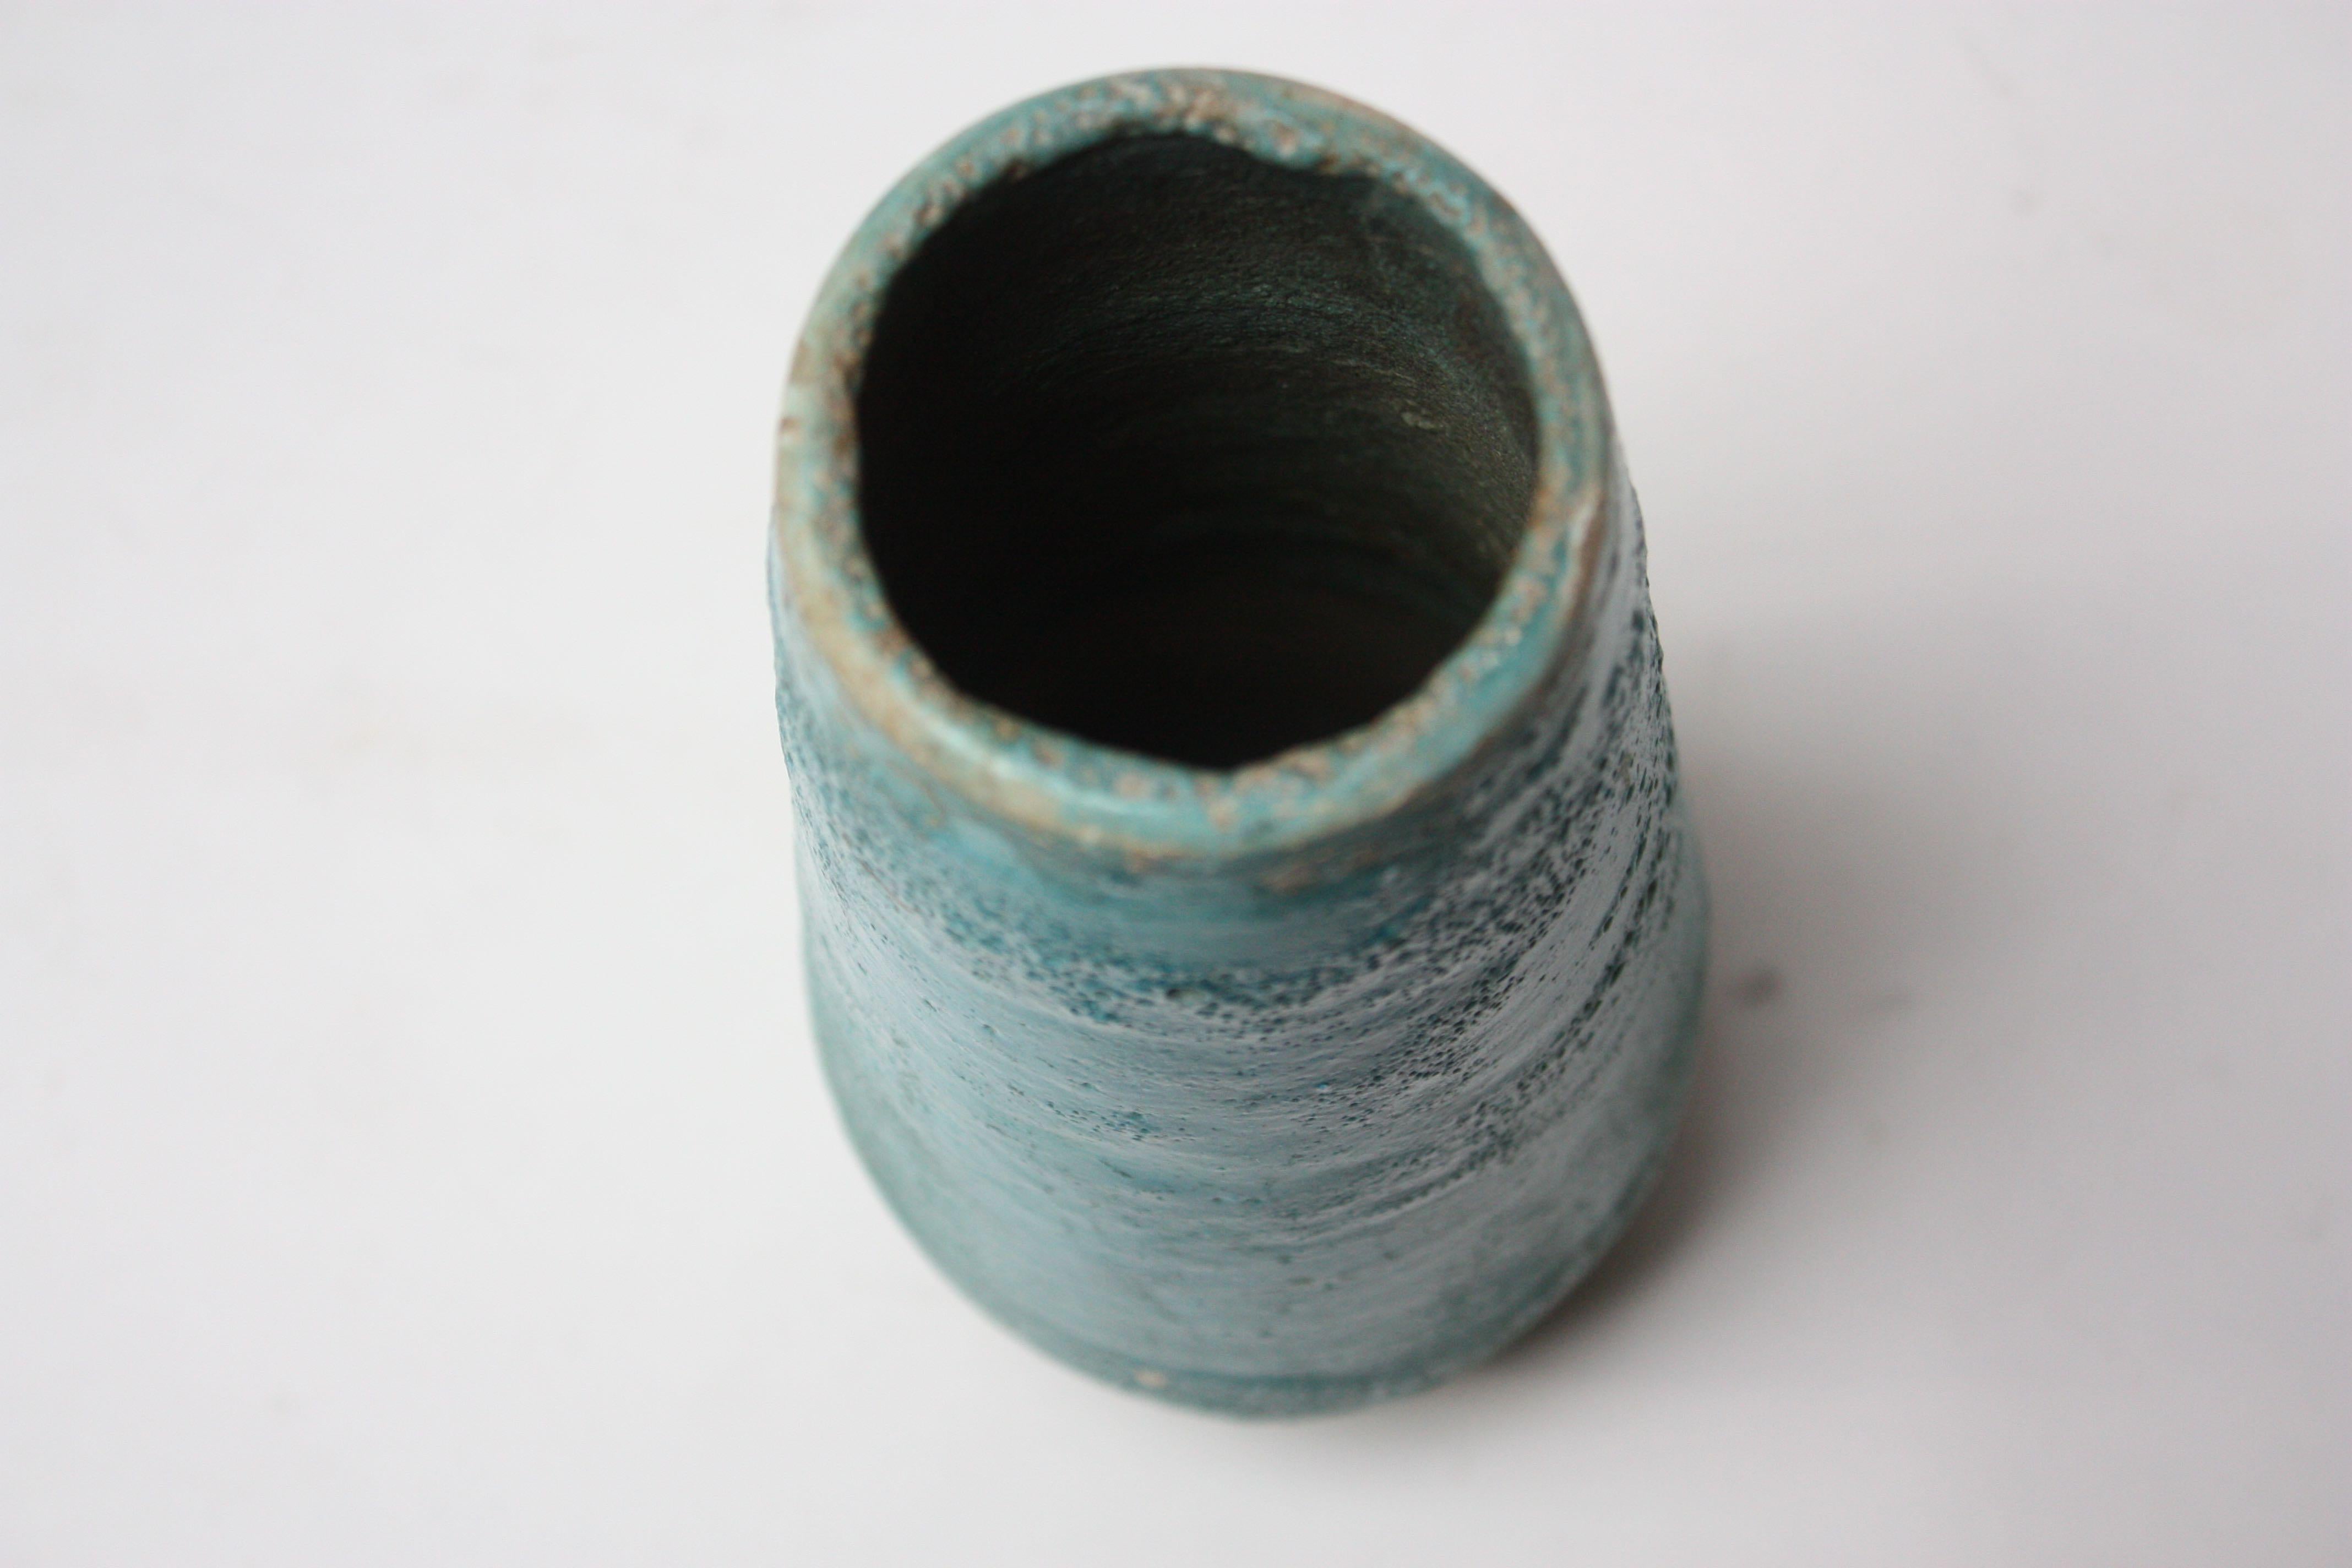 American Studio Pottery Volcanic-Texture Vase by Mark Keram in Turquoise